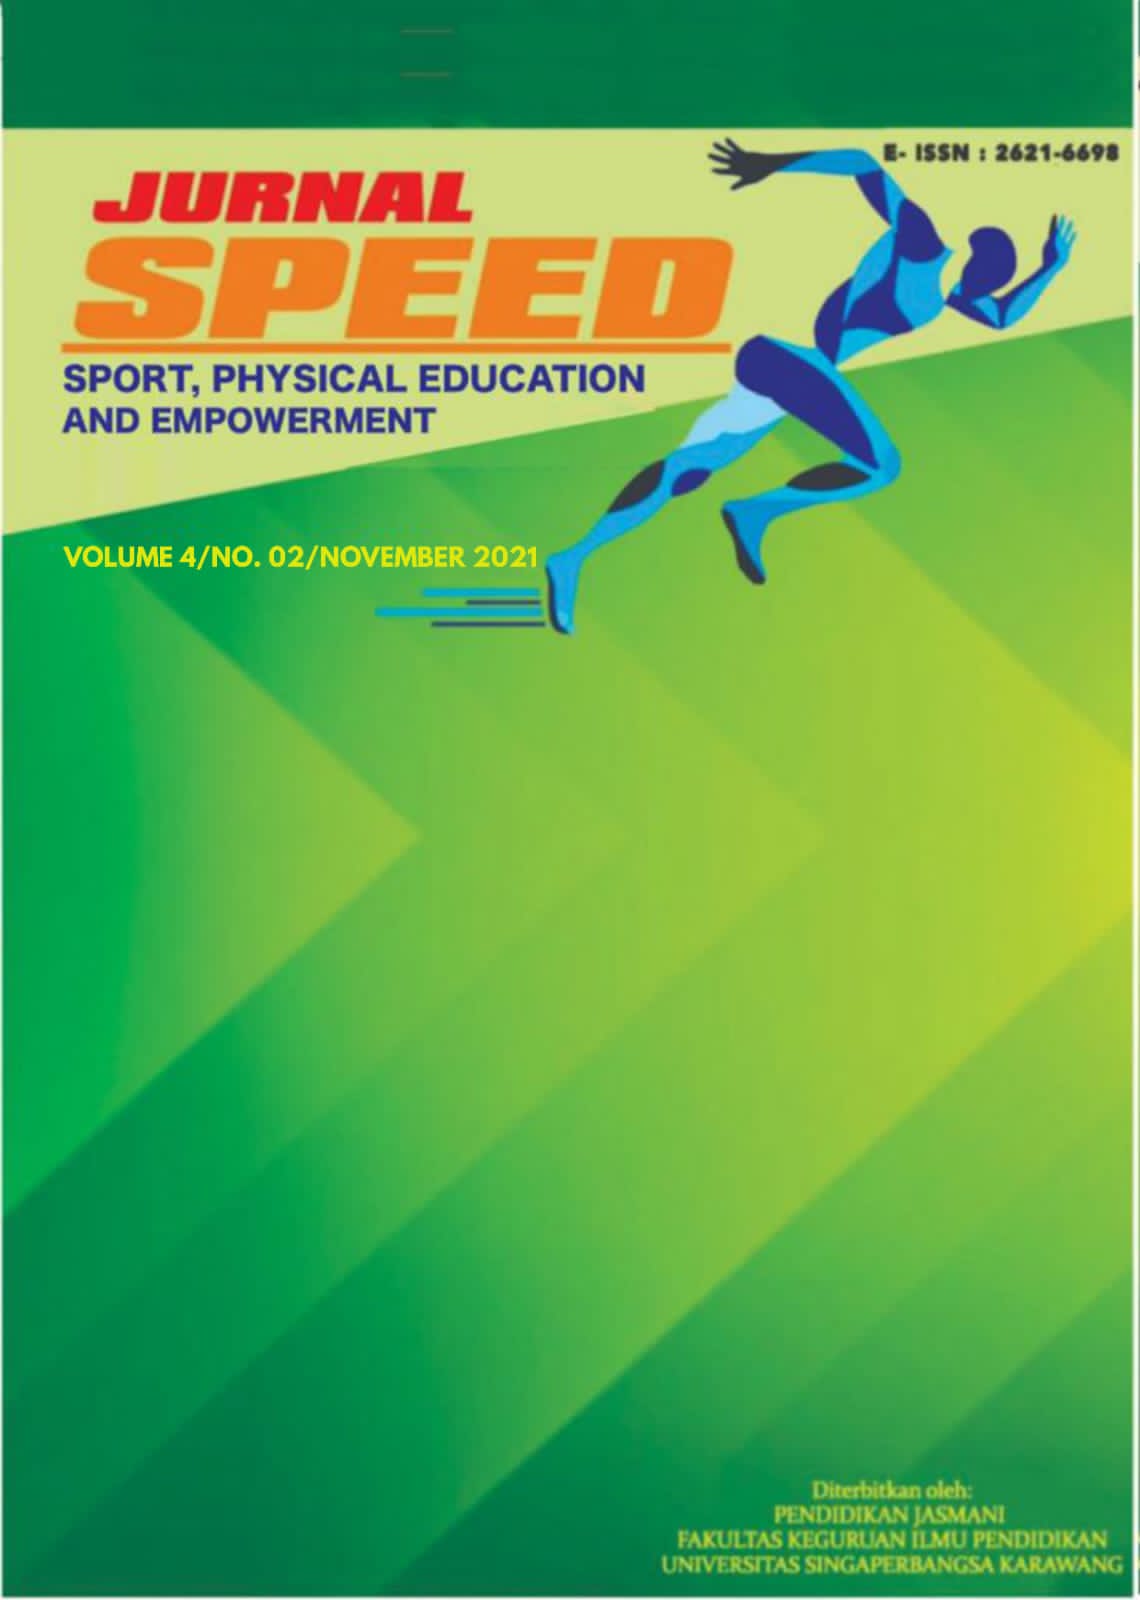 					Lihat Vol 4 No 02 (2021): Jurnal Sport, Physical Education and Empowerment (JSPEED) Volume 4 Nomor 02 November 2021
				